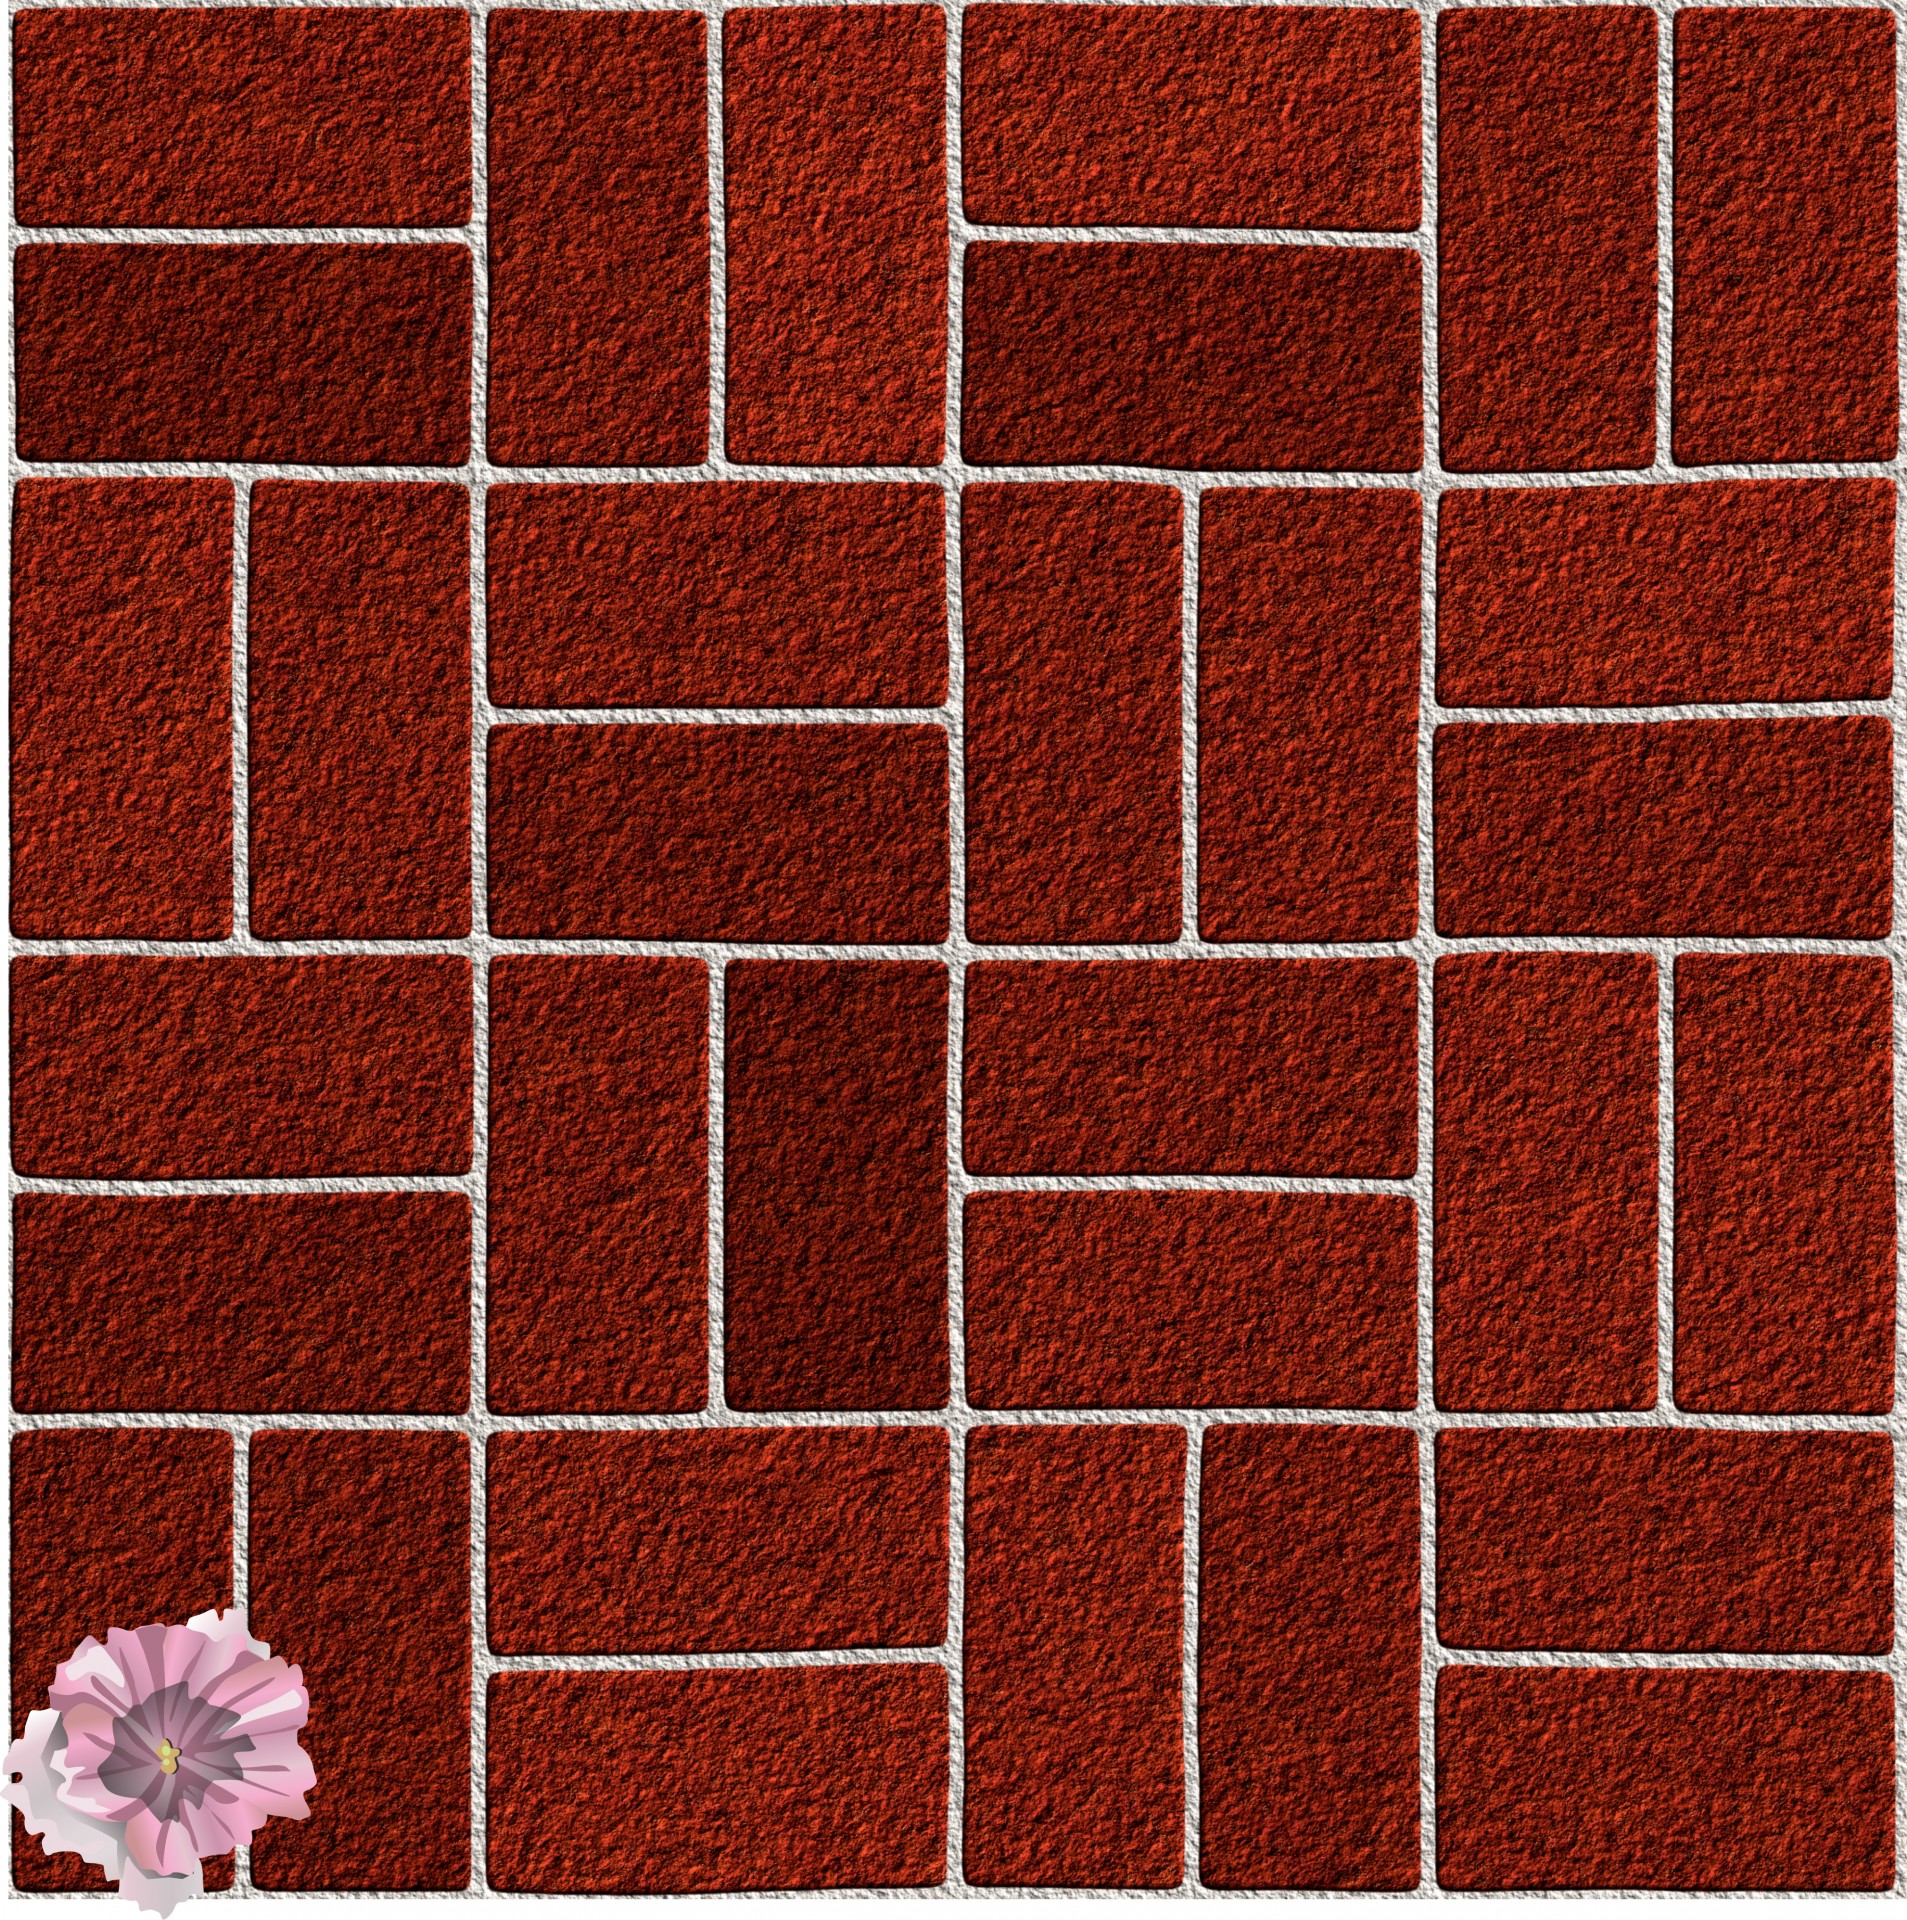 red bricks wall free photo